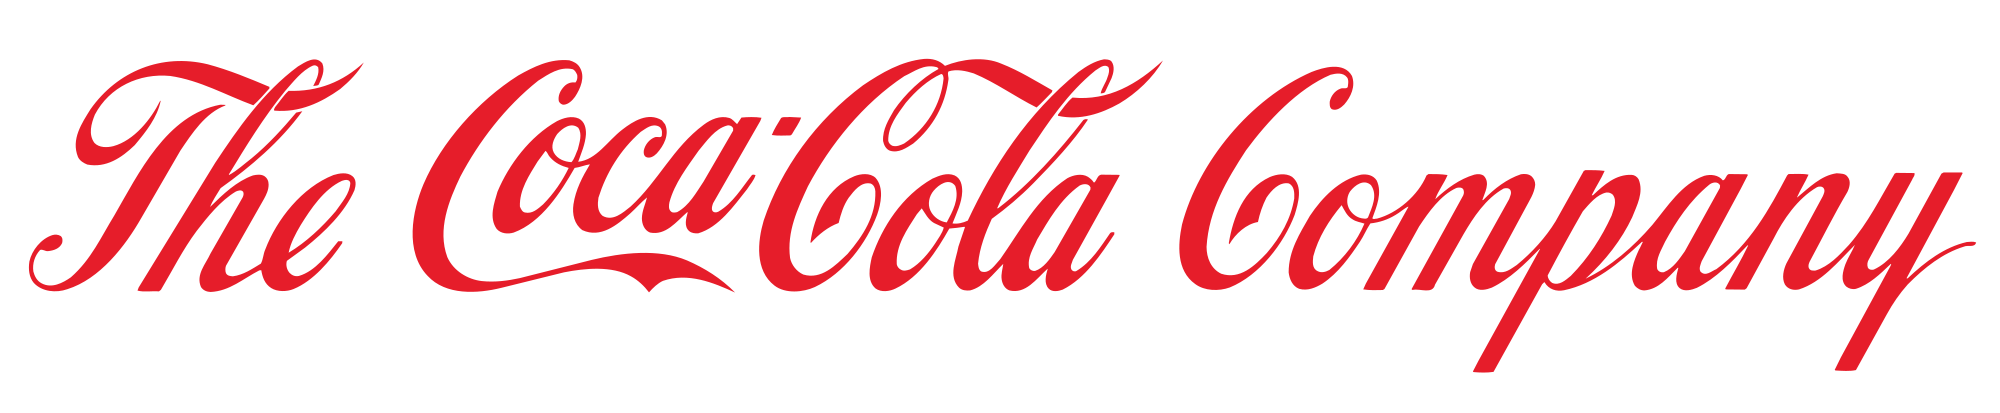 Logo coca cola